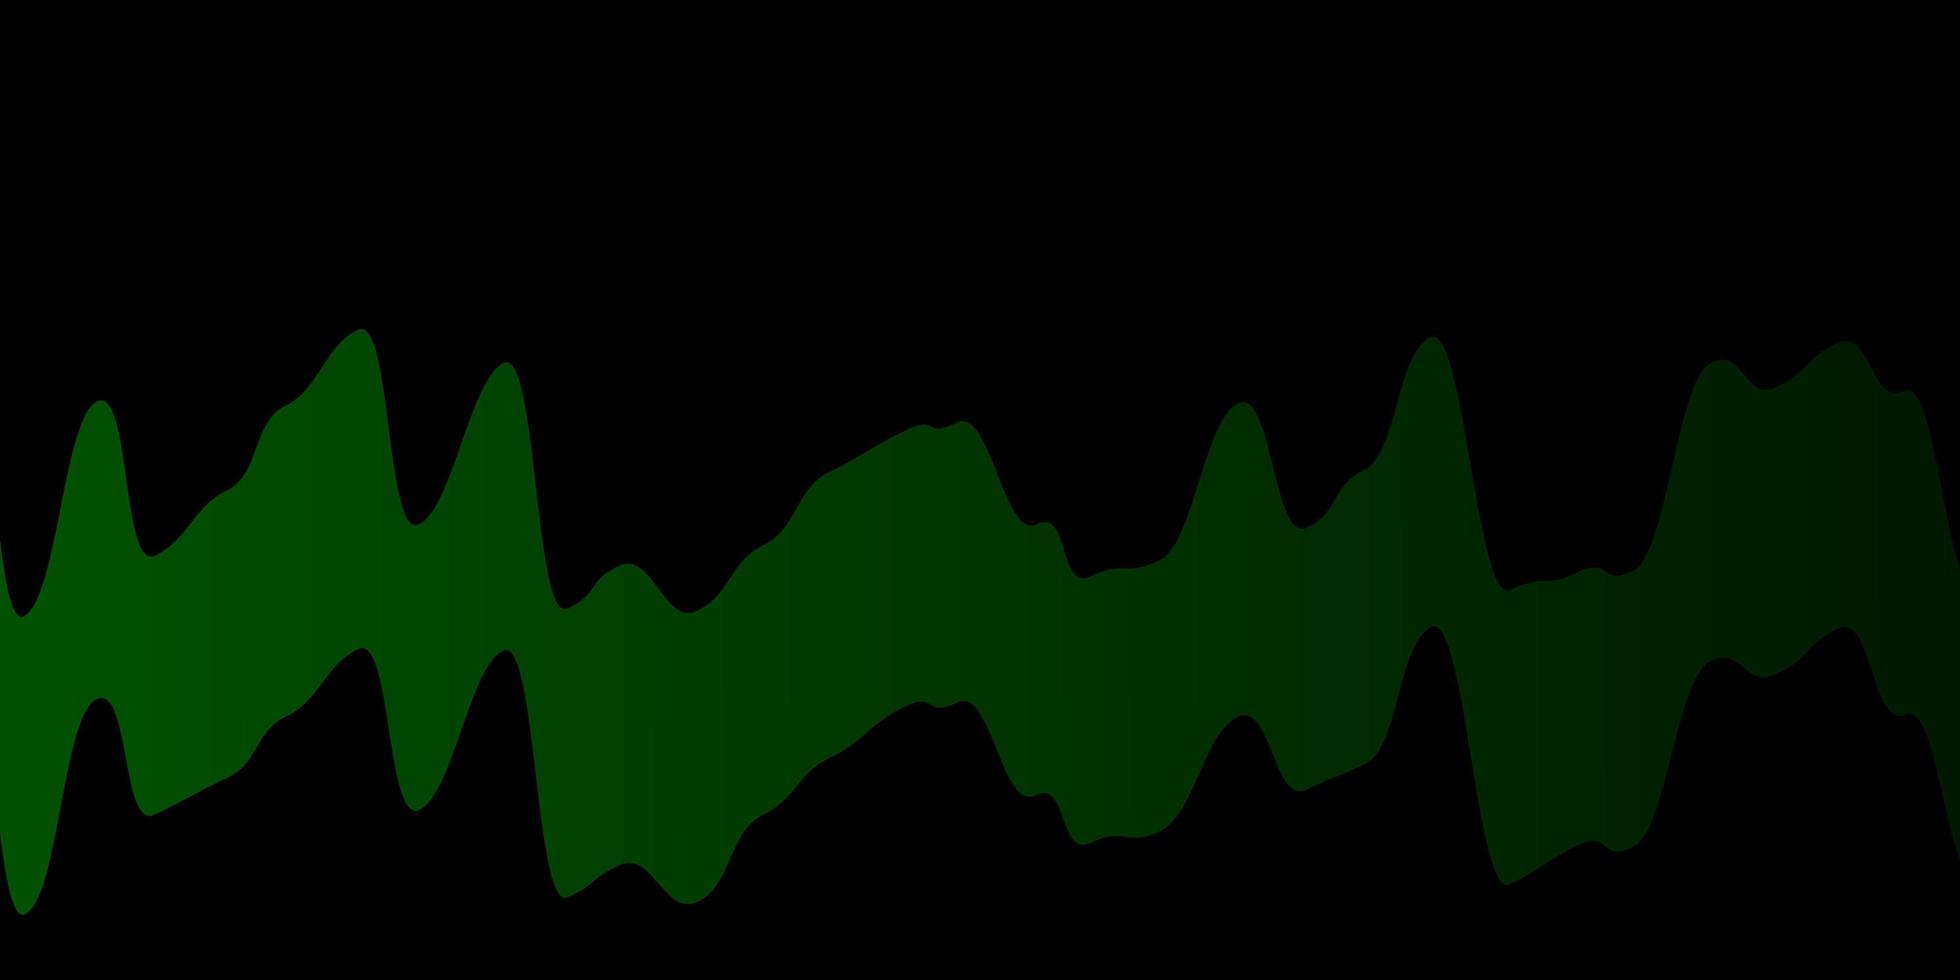 textura vector verde escuro com curvas.